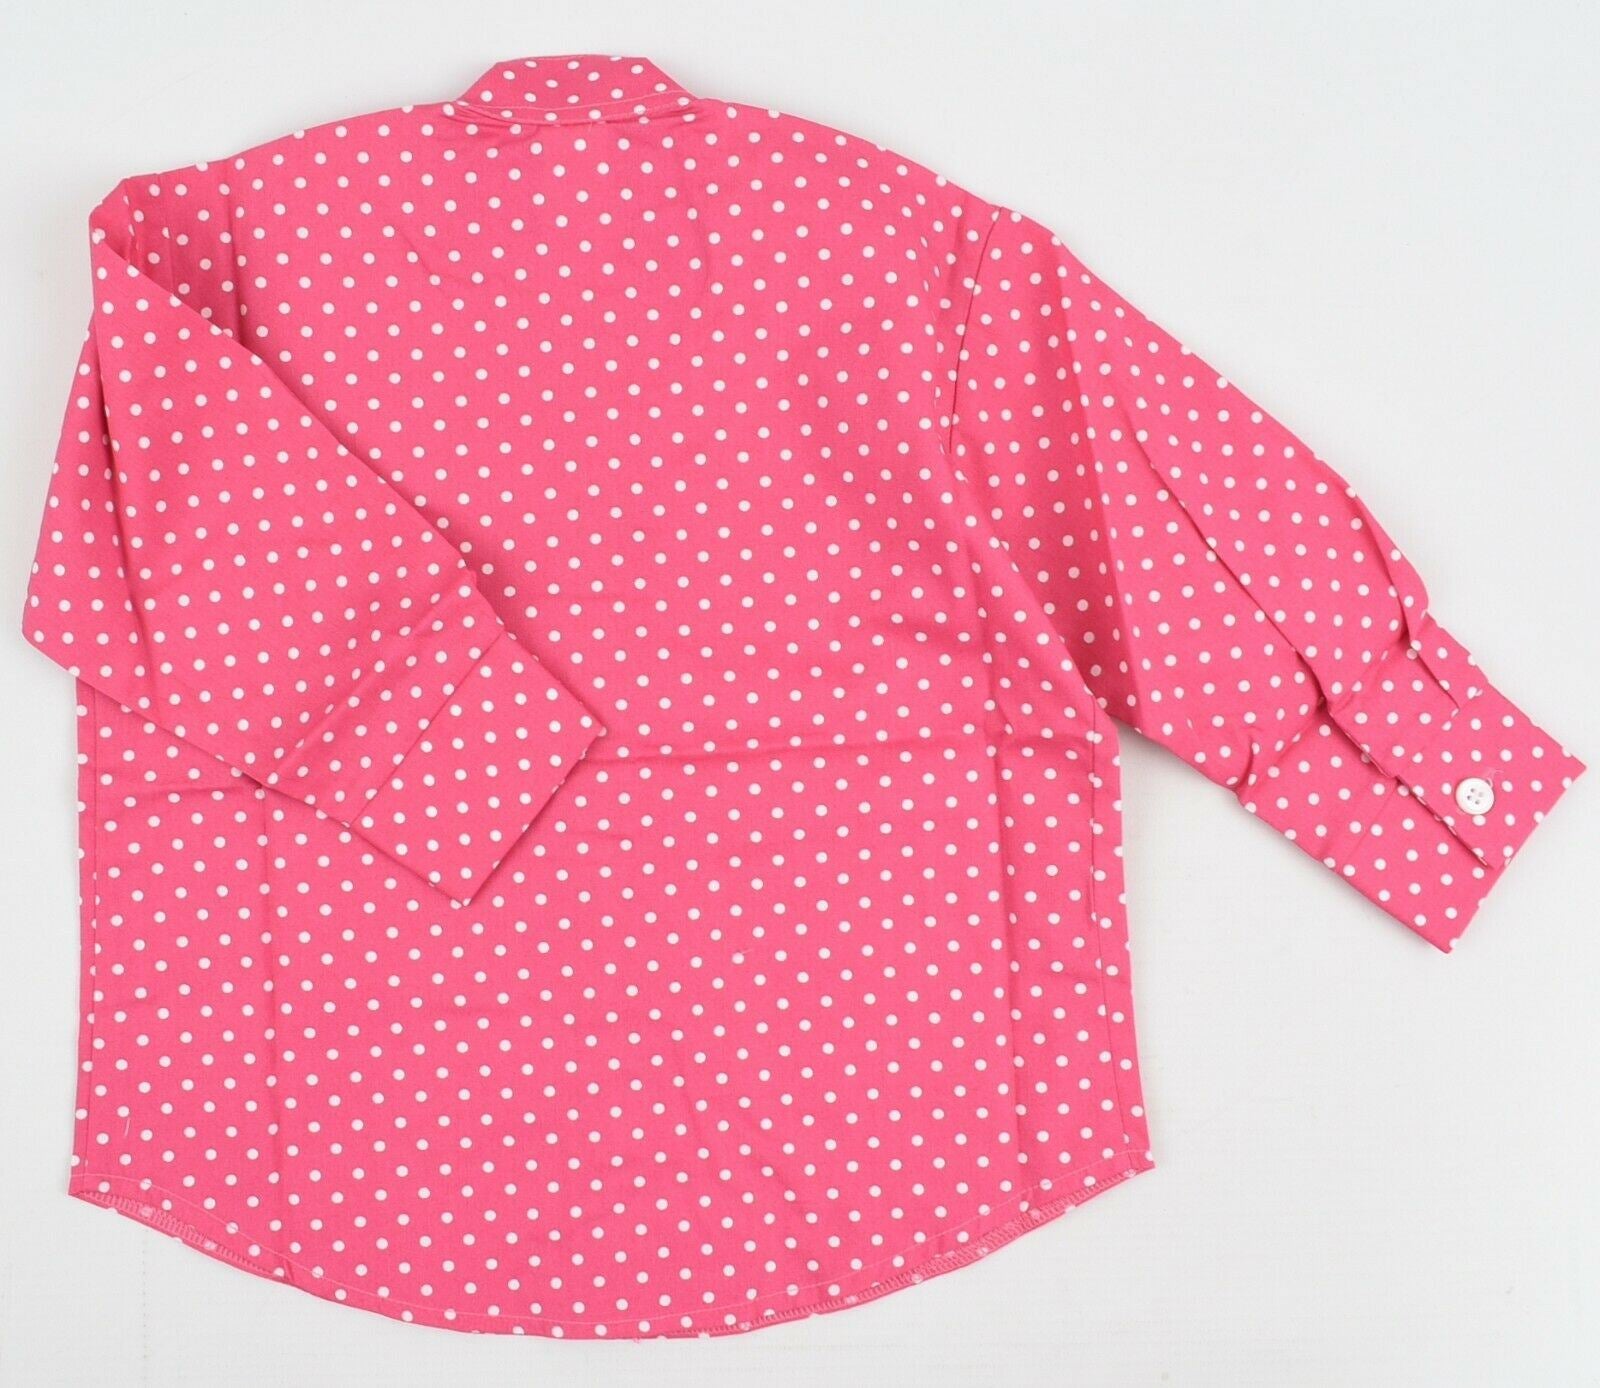 GREEN RABBIT Baby Girls' Polka Dot Shirt, Pink, MADE IN UK, size 0-6 Months